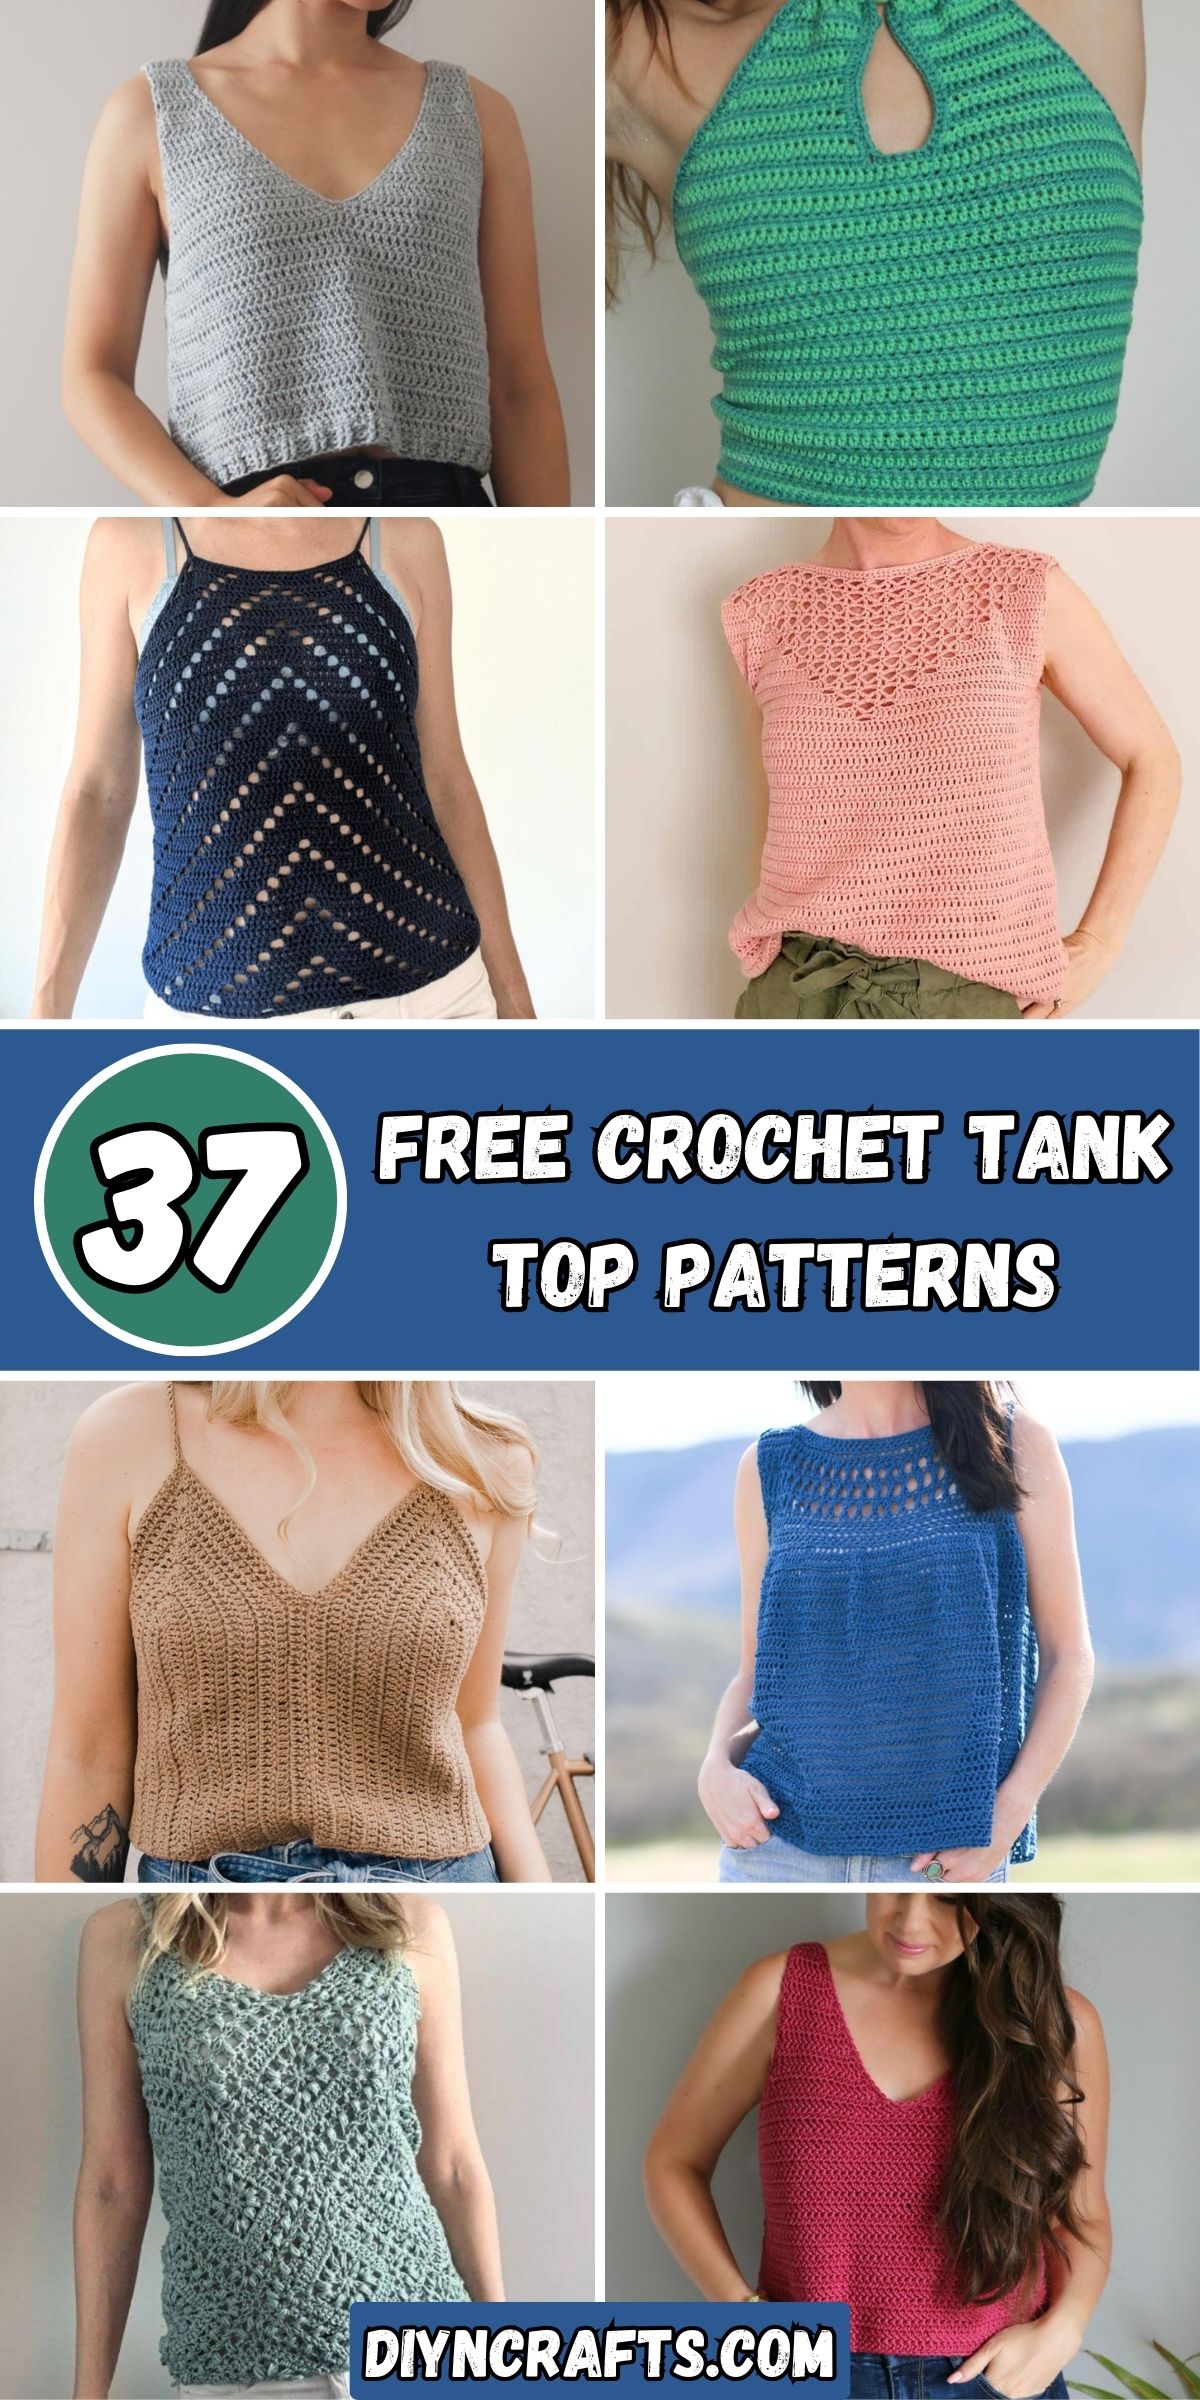 37 Free Crochet Tank Top Patterns collage.